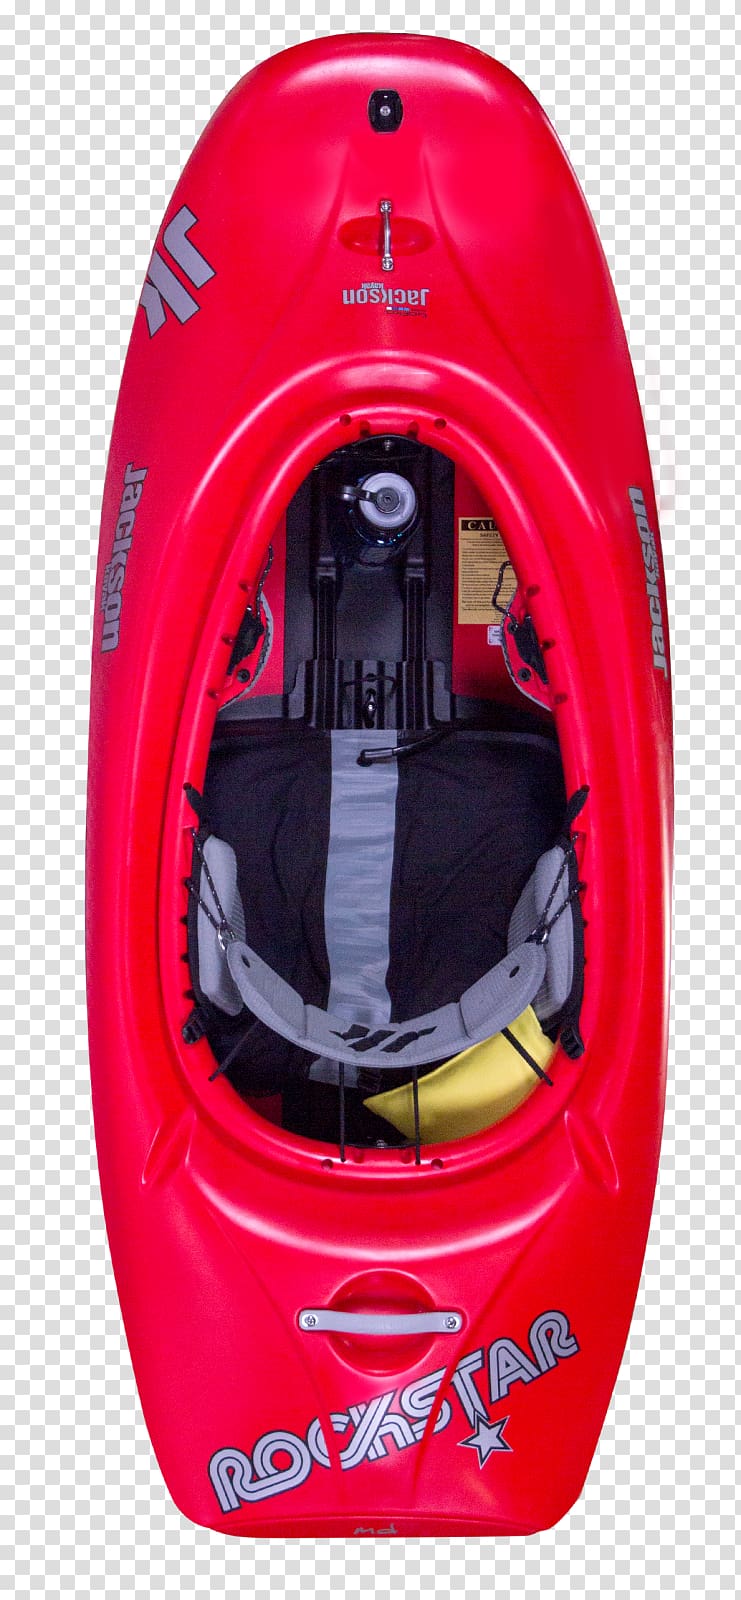 Jackson Kayak, Inc. Rockstar Whitewater kayaking, Redbilled Chough transparent background PNG clipart